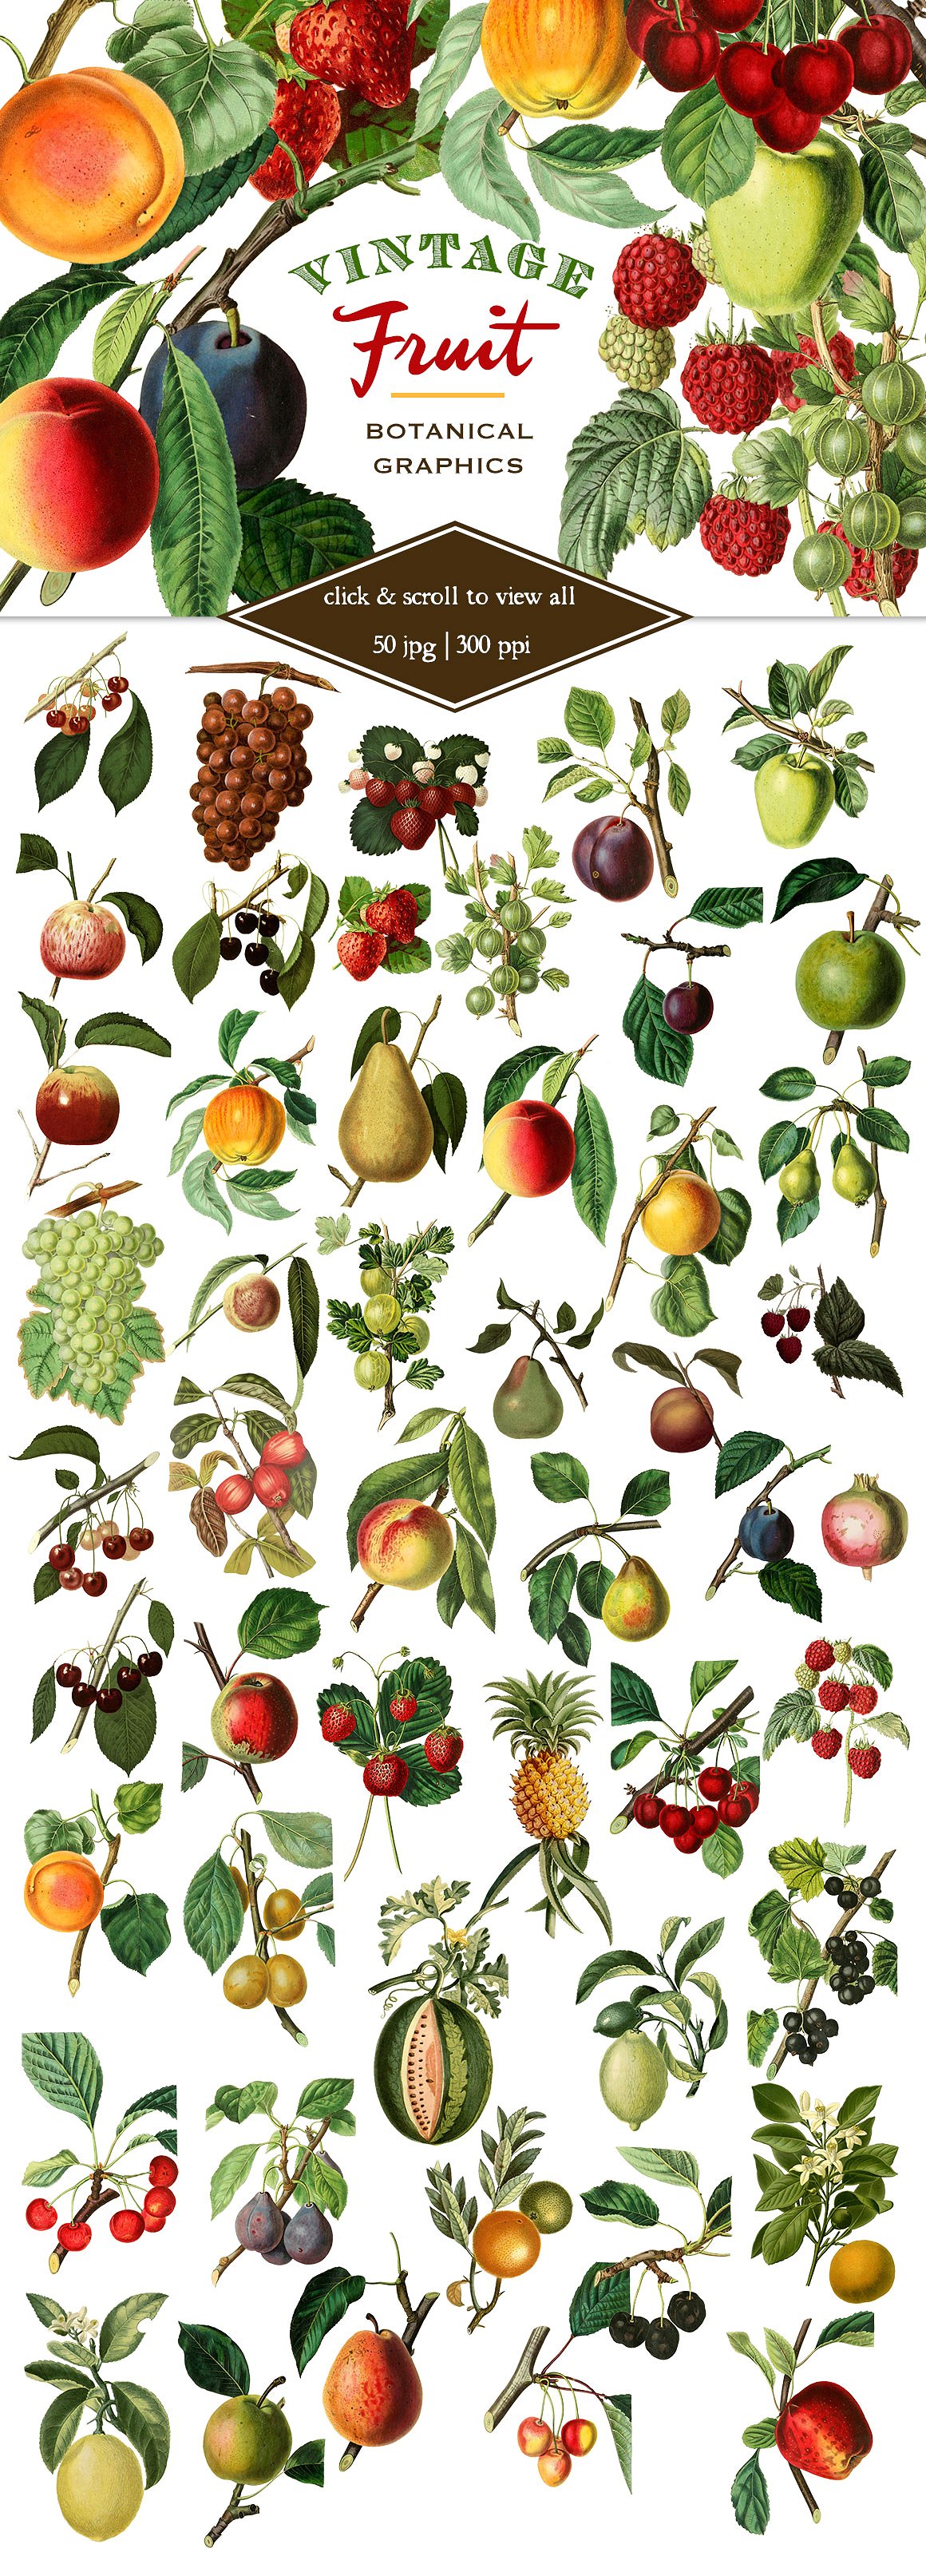 复古植物水果图形素材Vintage Fruit Botani